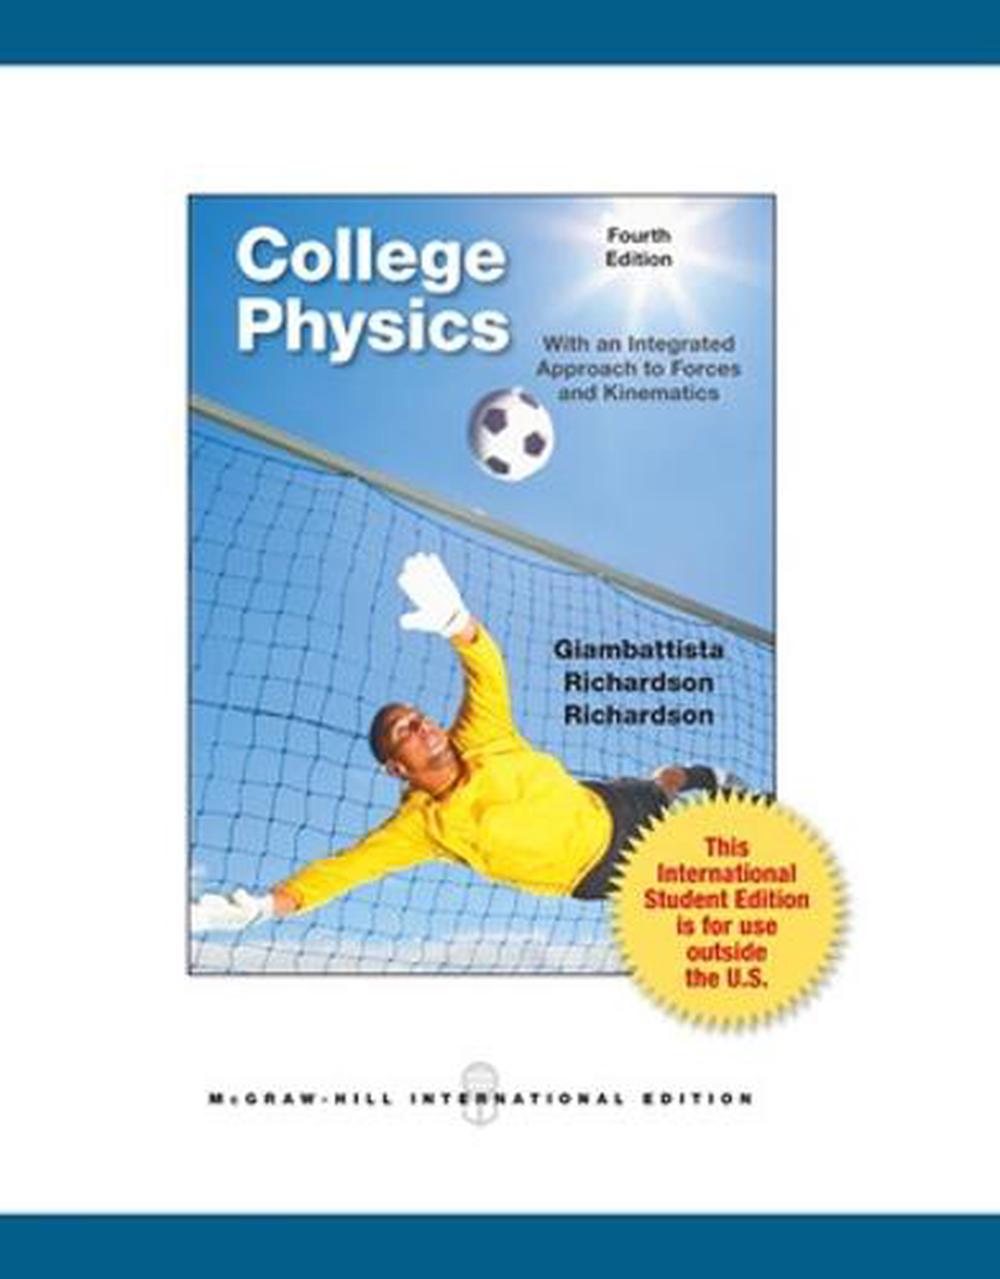 College Physics By Alan Giambattista English Paperback Book Free Shipping Ebay 0881